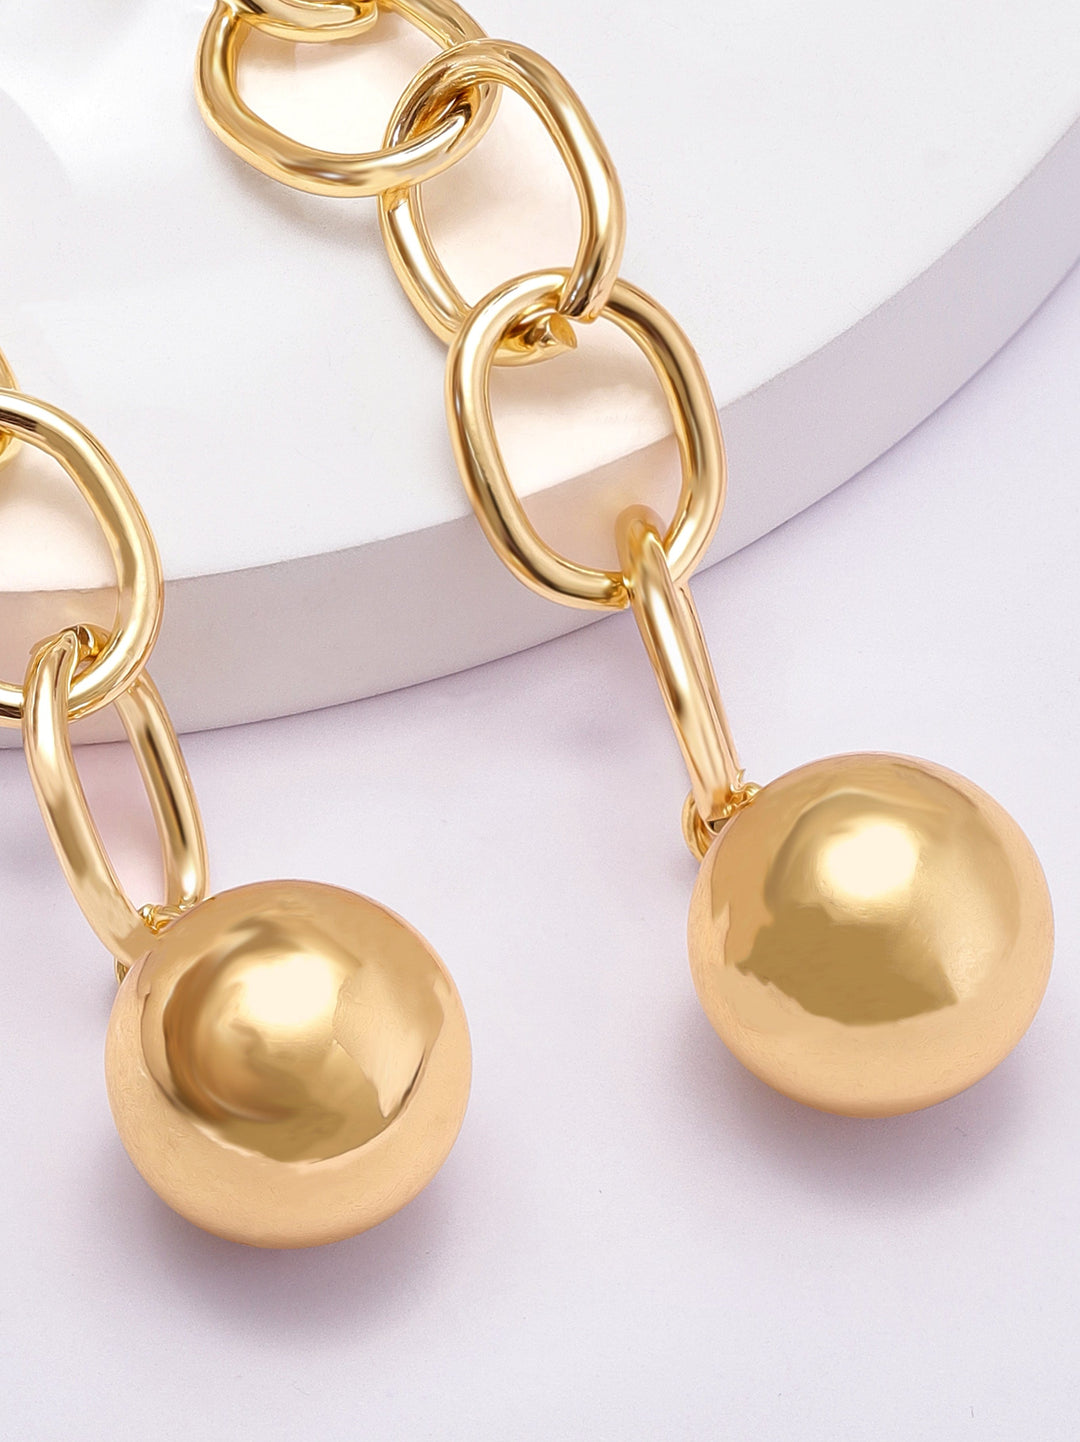 Rubans Voguish Gilded Elegance Gold Plated Linked Chain Drop Earrings Earrings